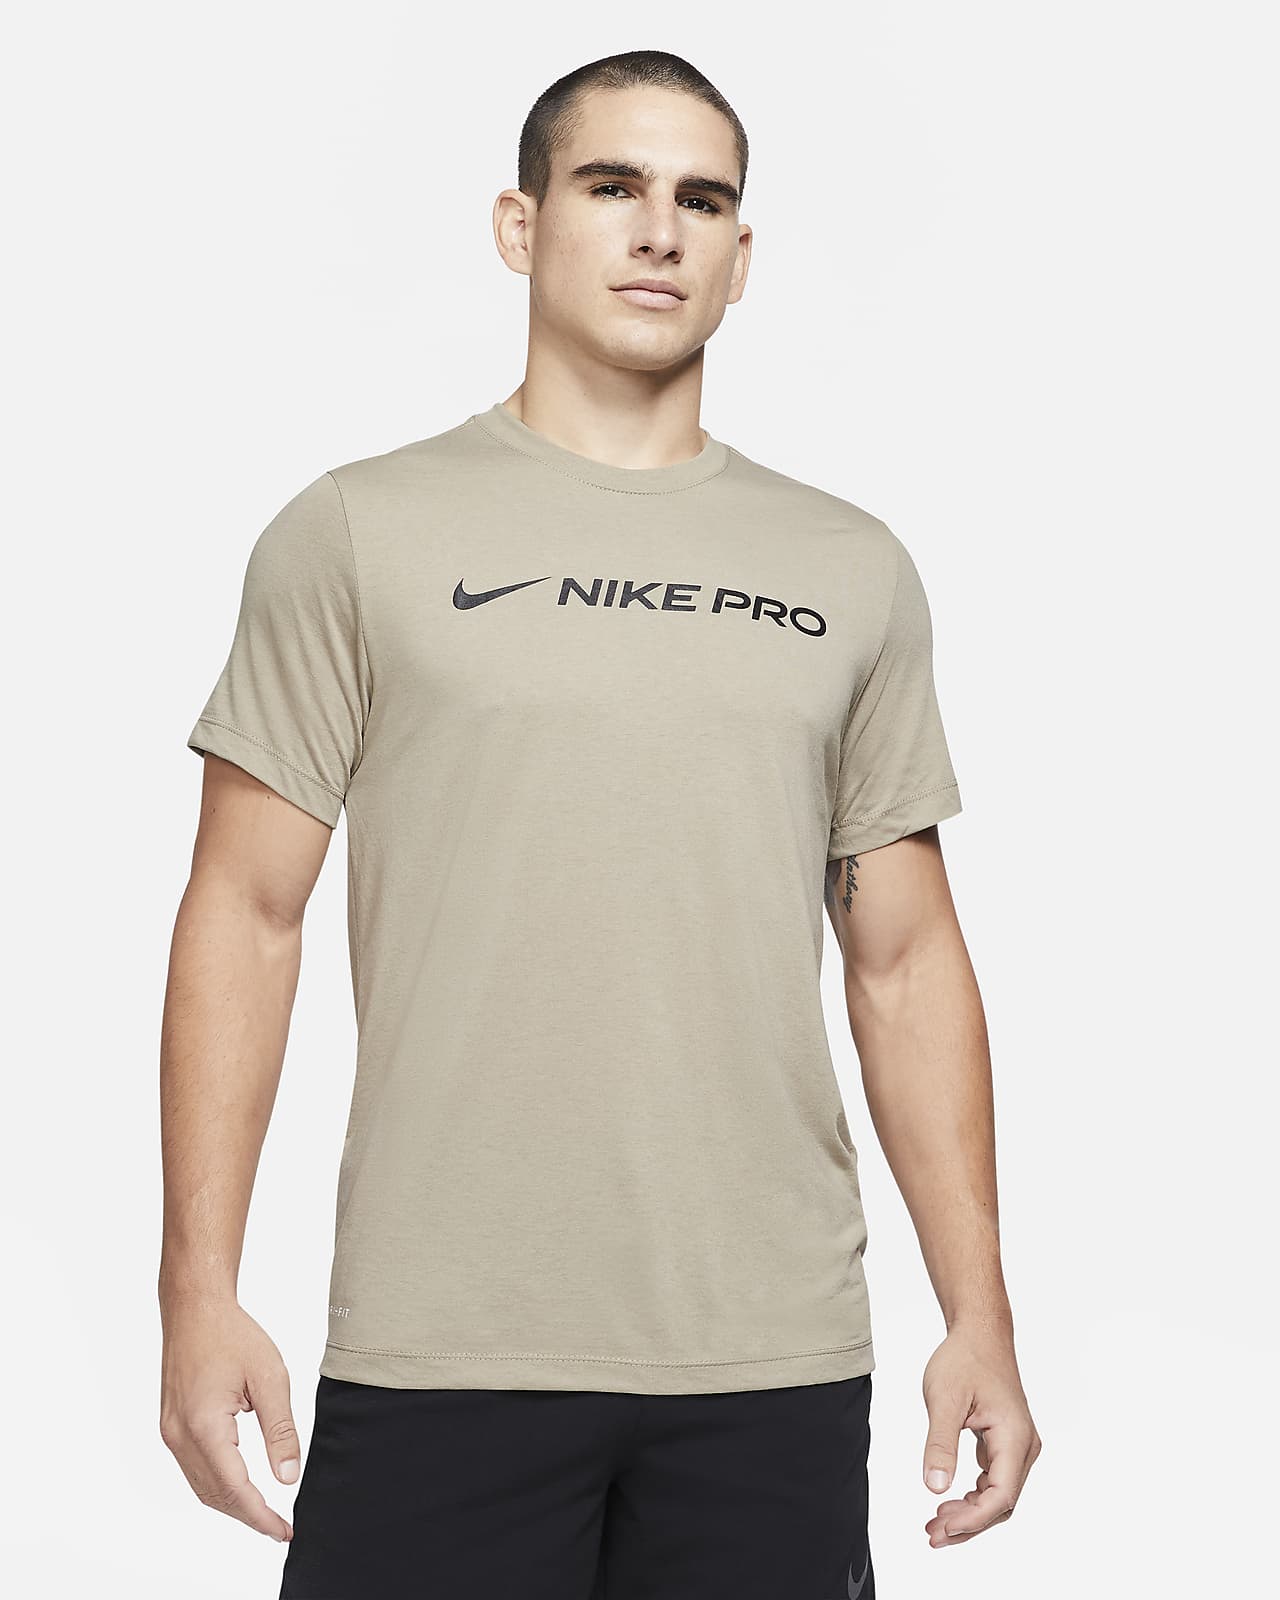 nike men's training shirt